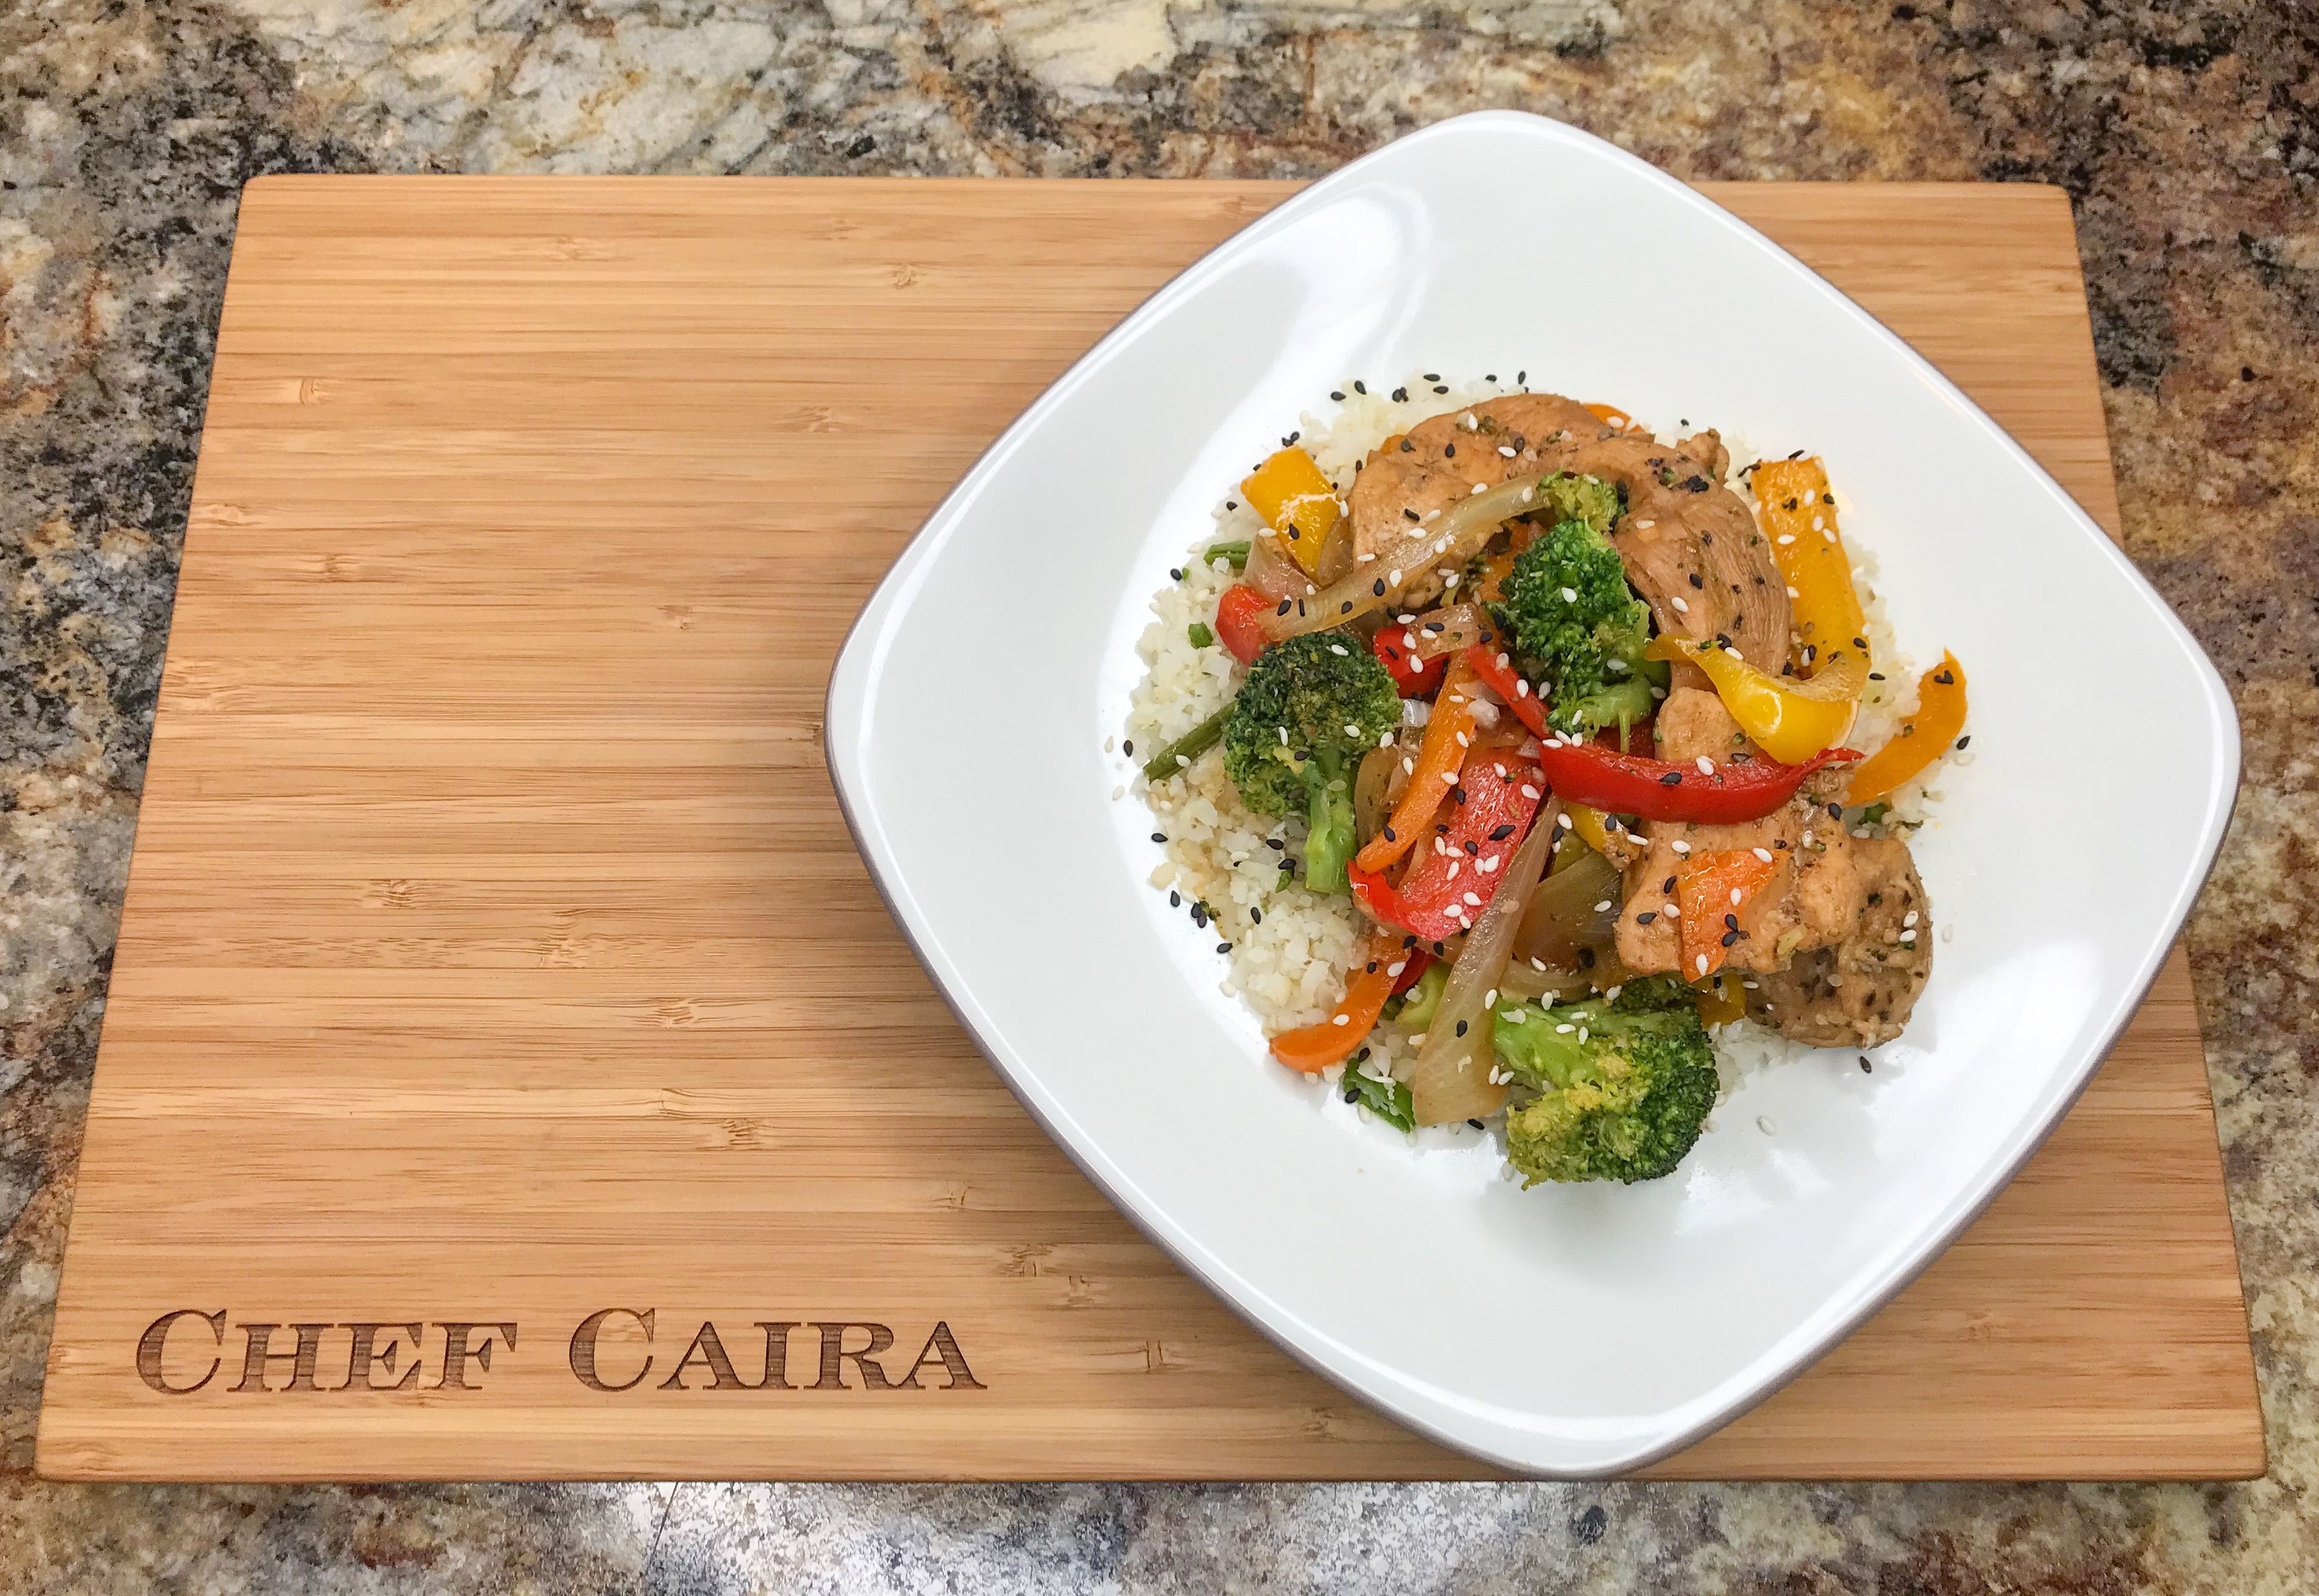 Chef Caira's Sesame Chicken Over Cauliflower Rice